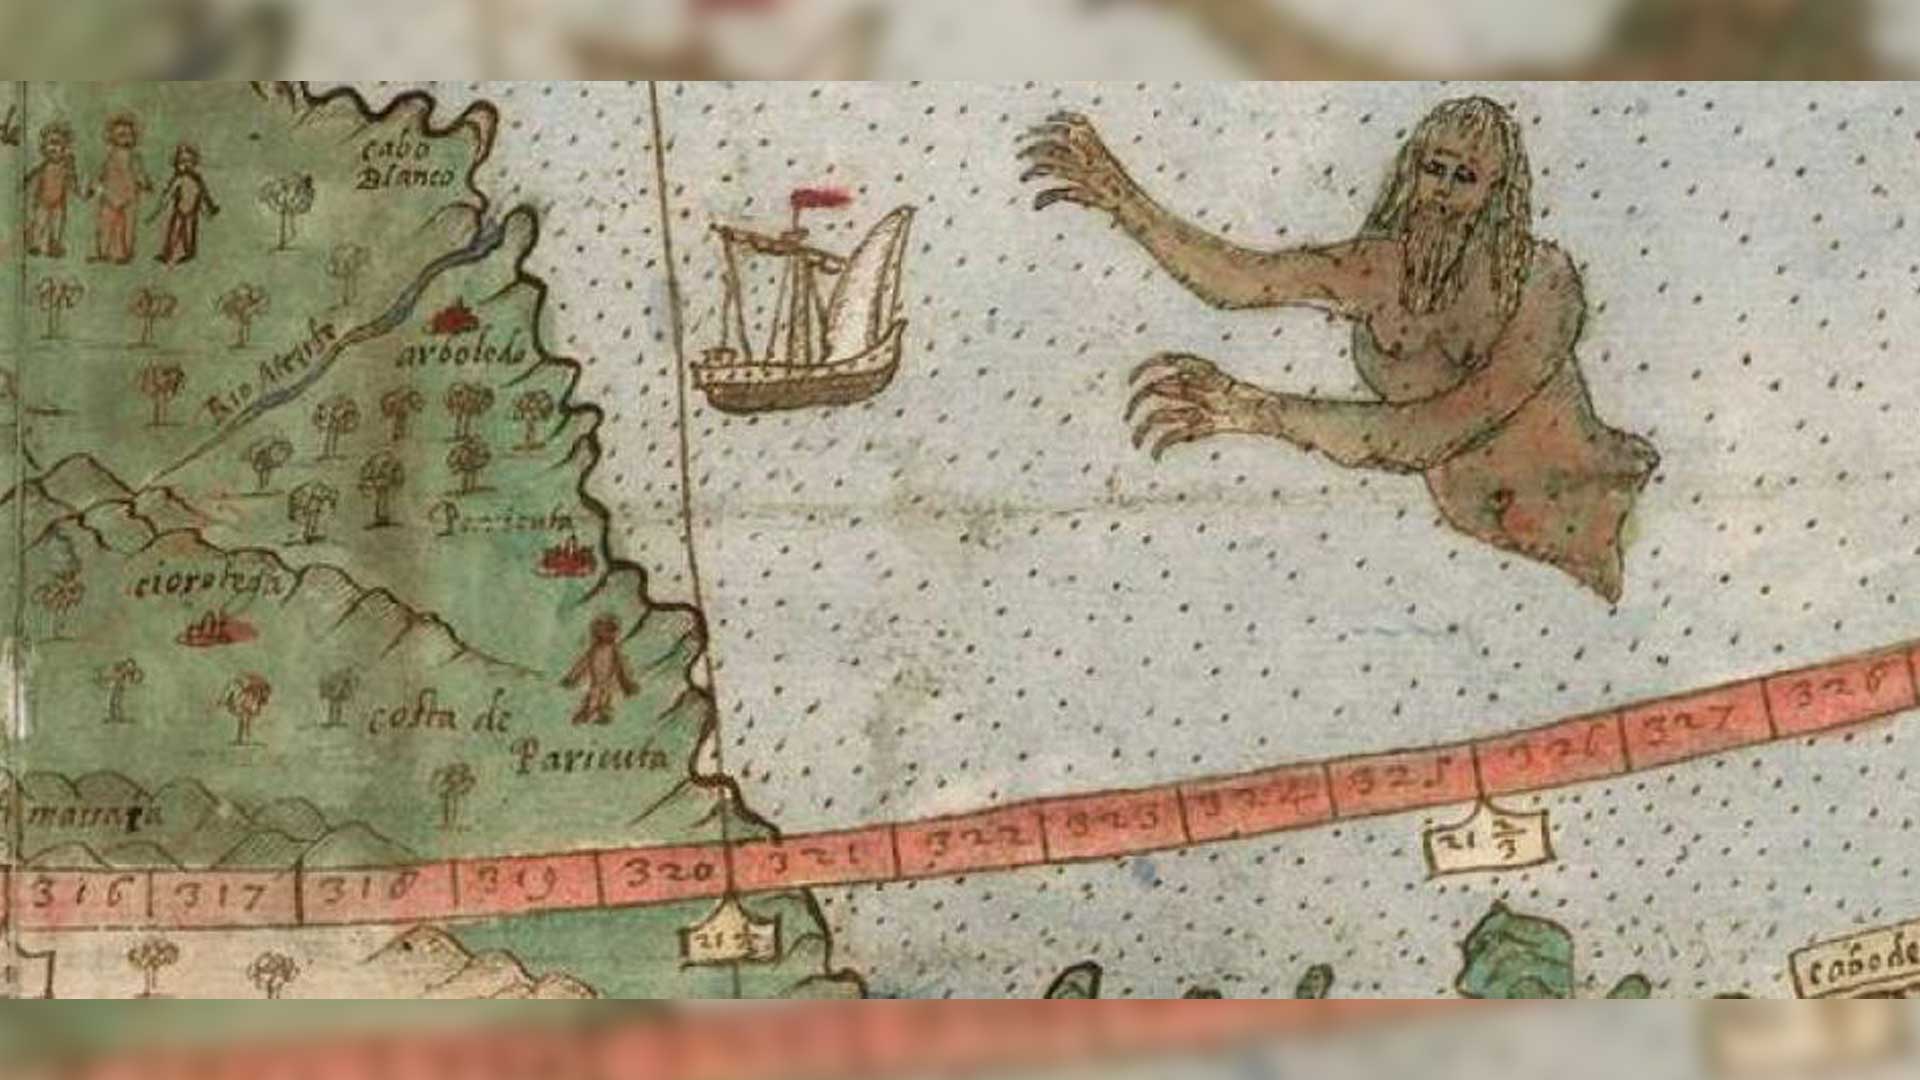 INCREÍBLE – Seres mitológicos representados en este antiguo mapa restaurado